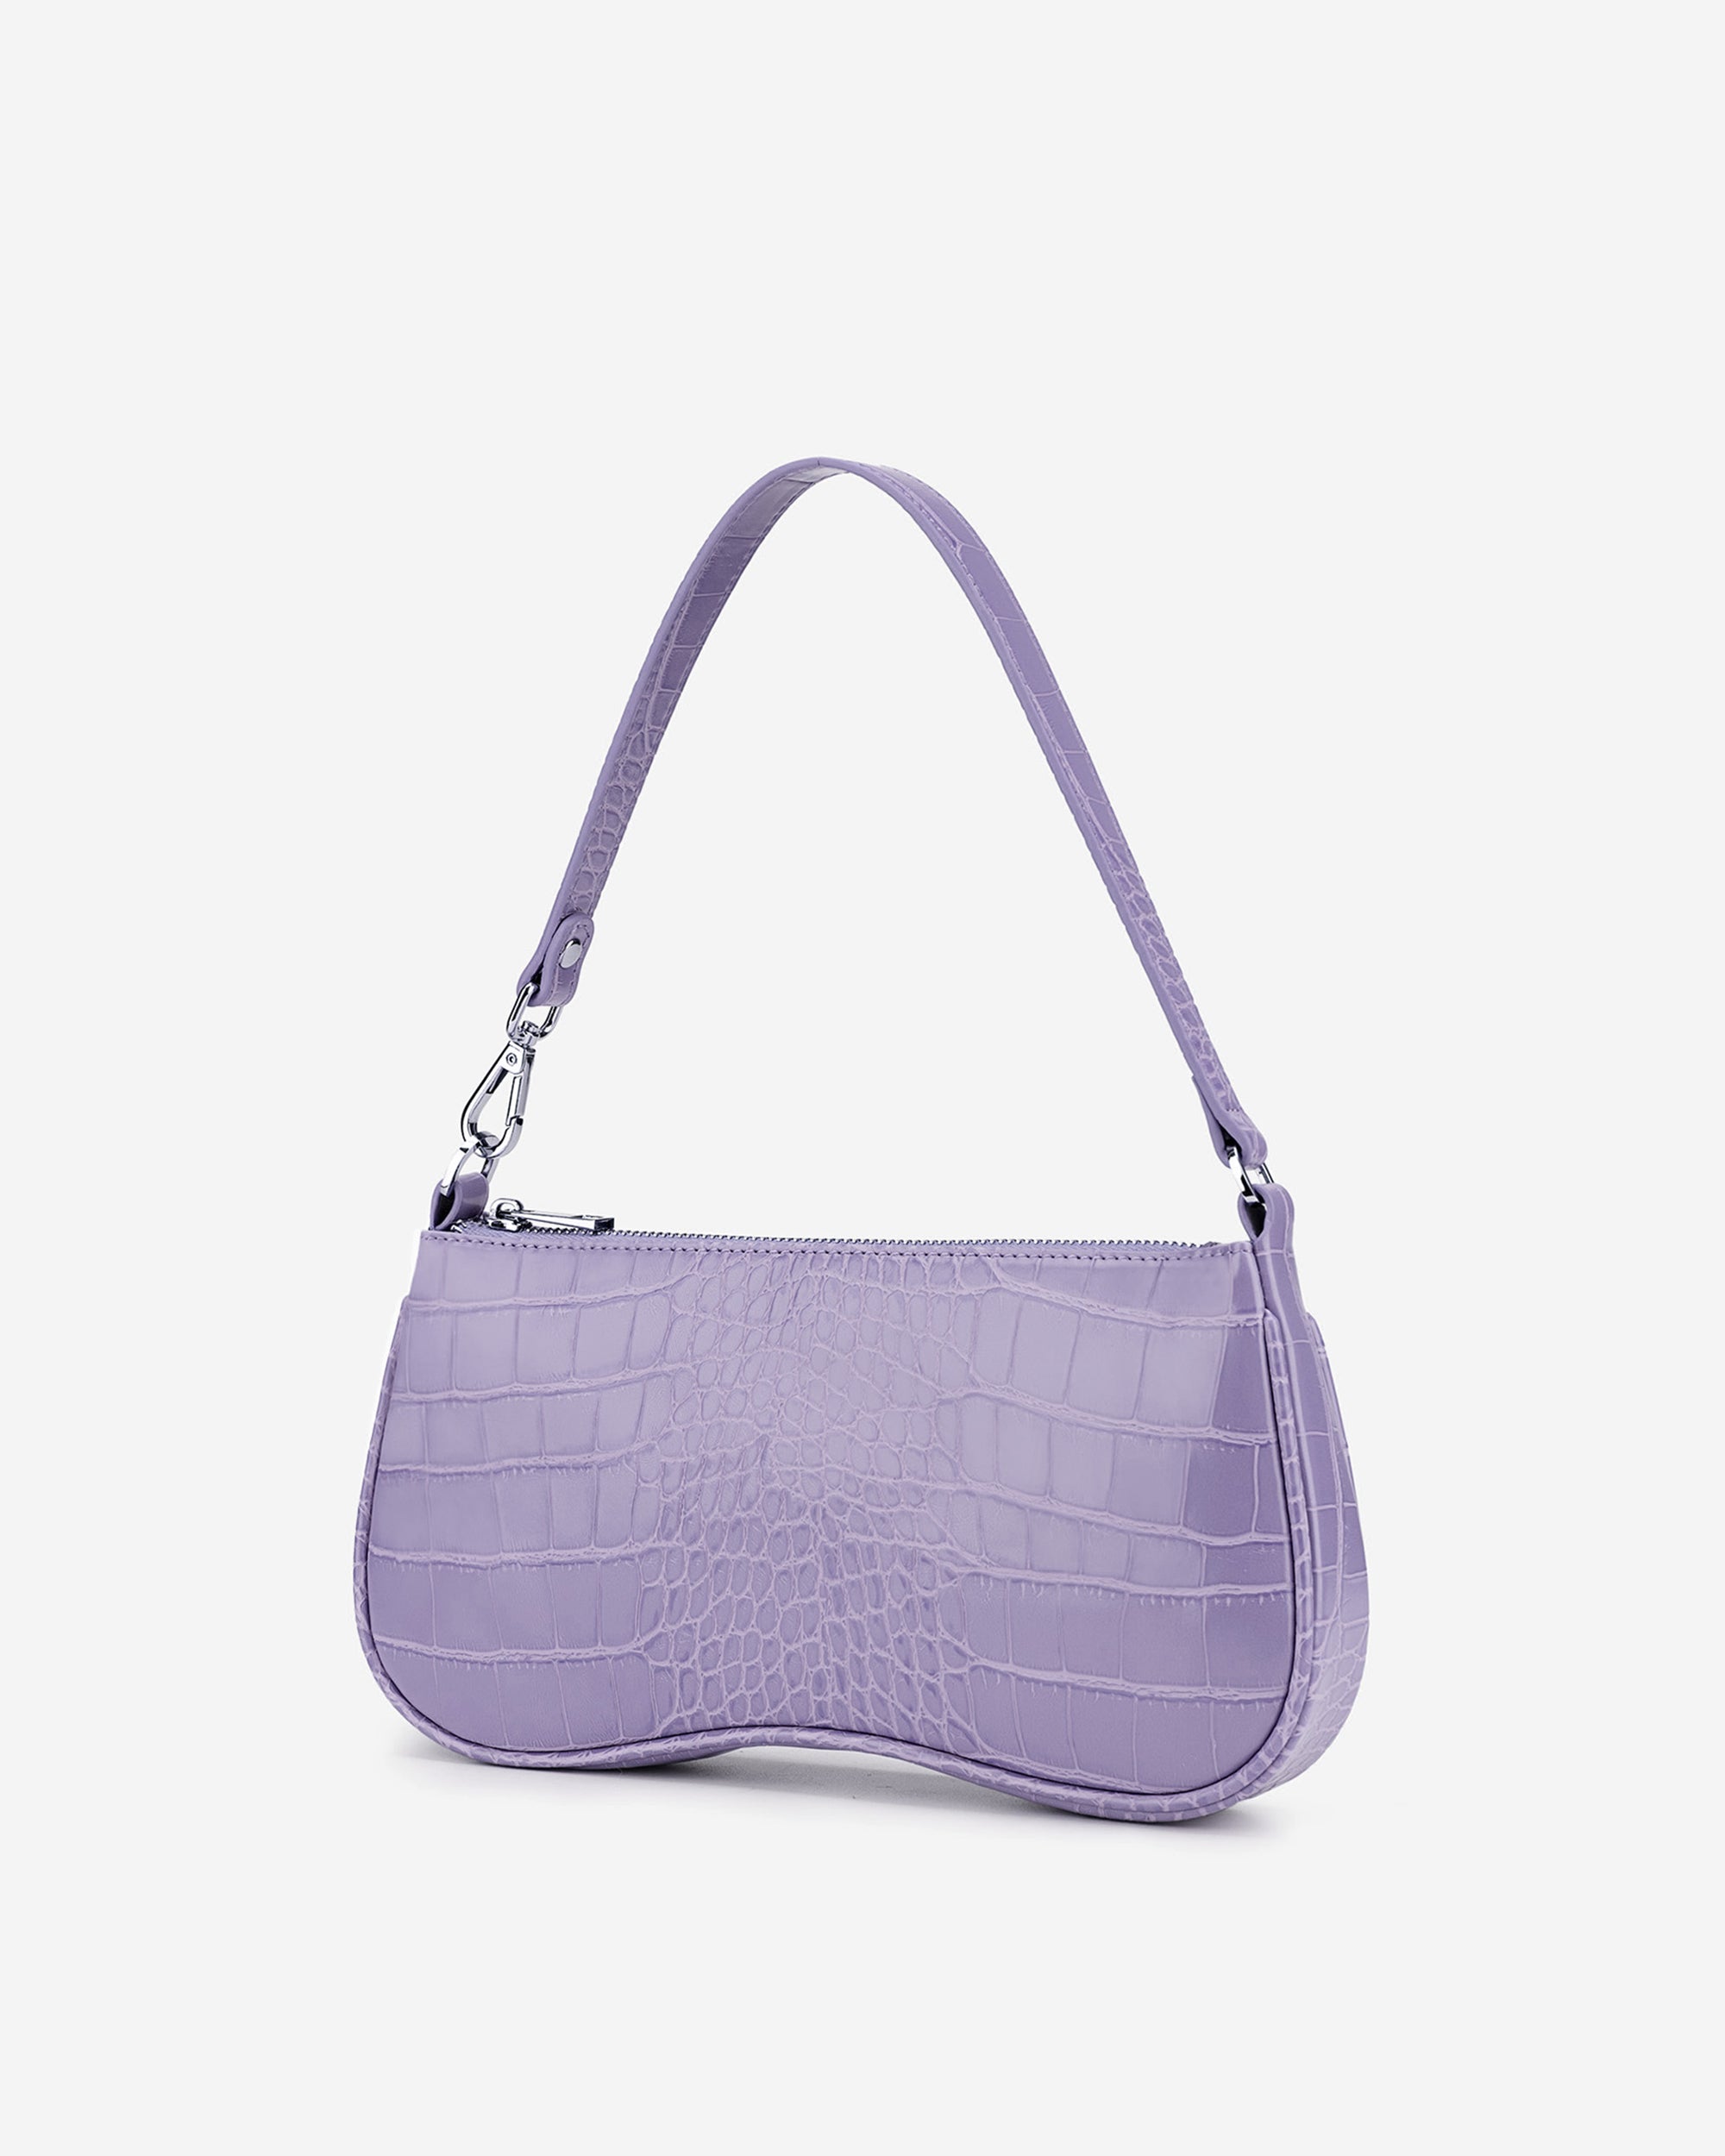 Eva 單肩包 - 紫色鱷魚紋